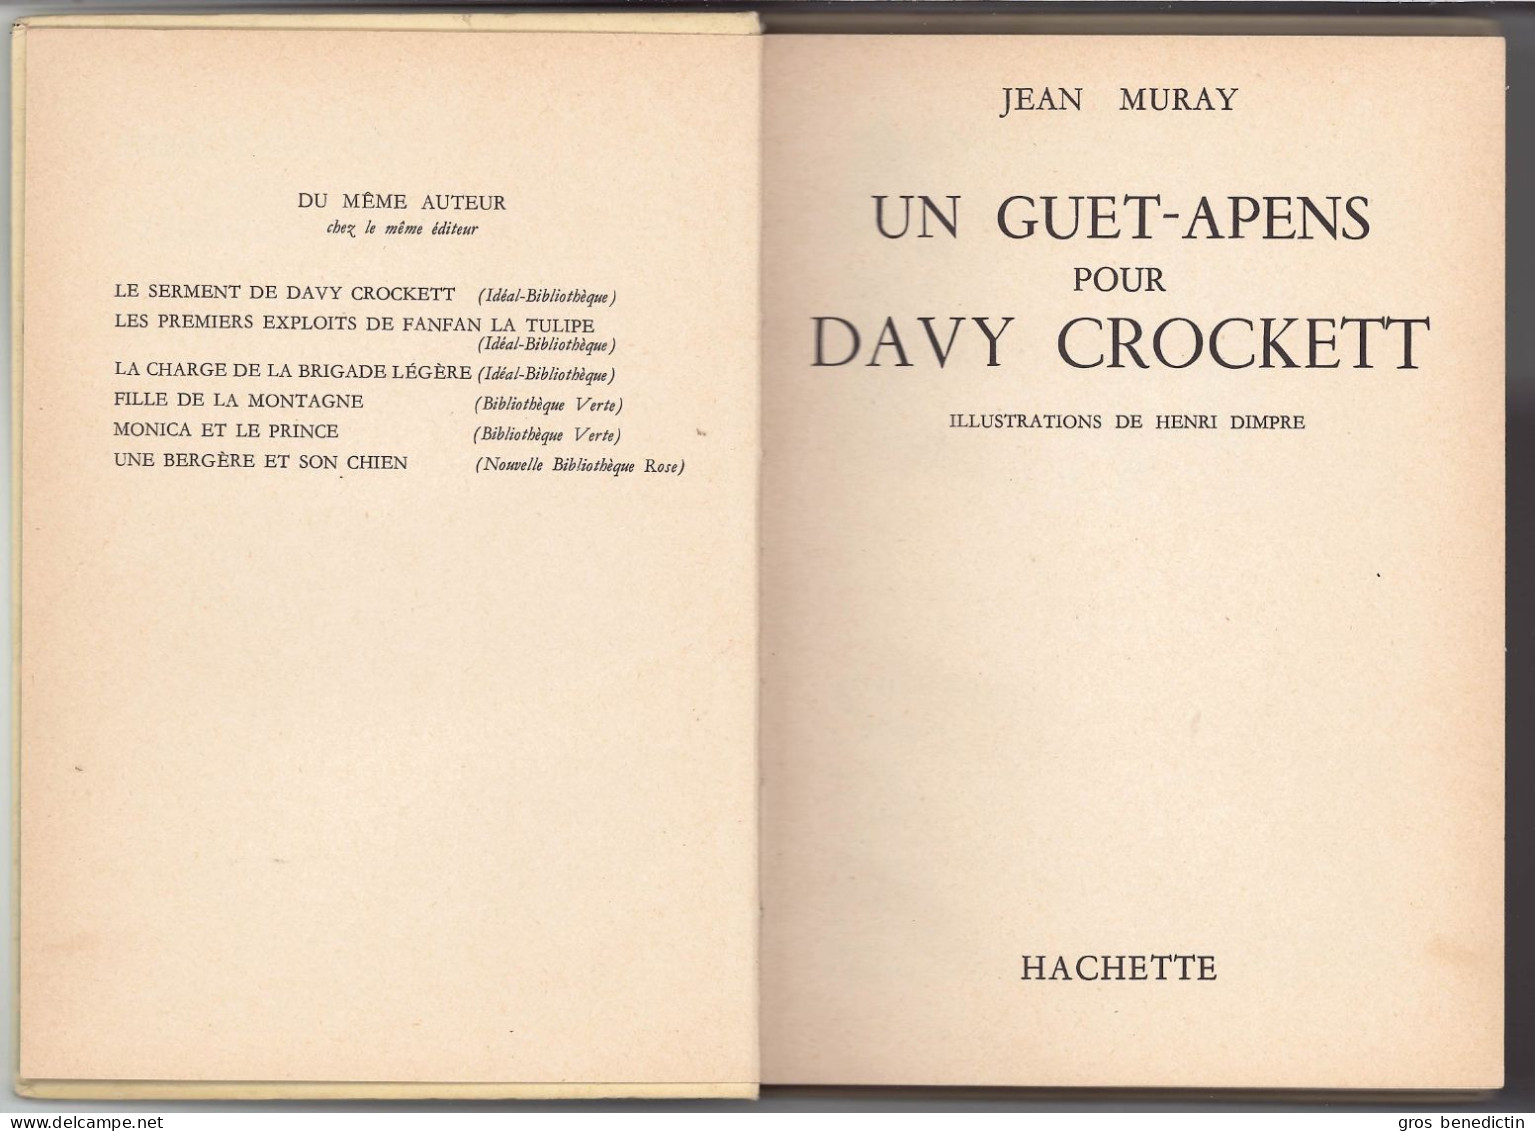 Hachette - Idéal Bibliothèque  -  Jean Muray - "Un Guet-apens Pour Davy Crockett" - 1960 - #Ben&IB - Ideal Bibliotheque